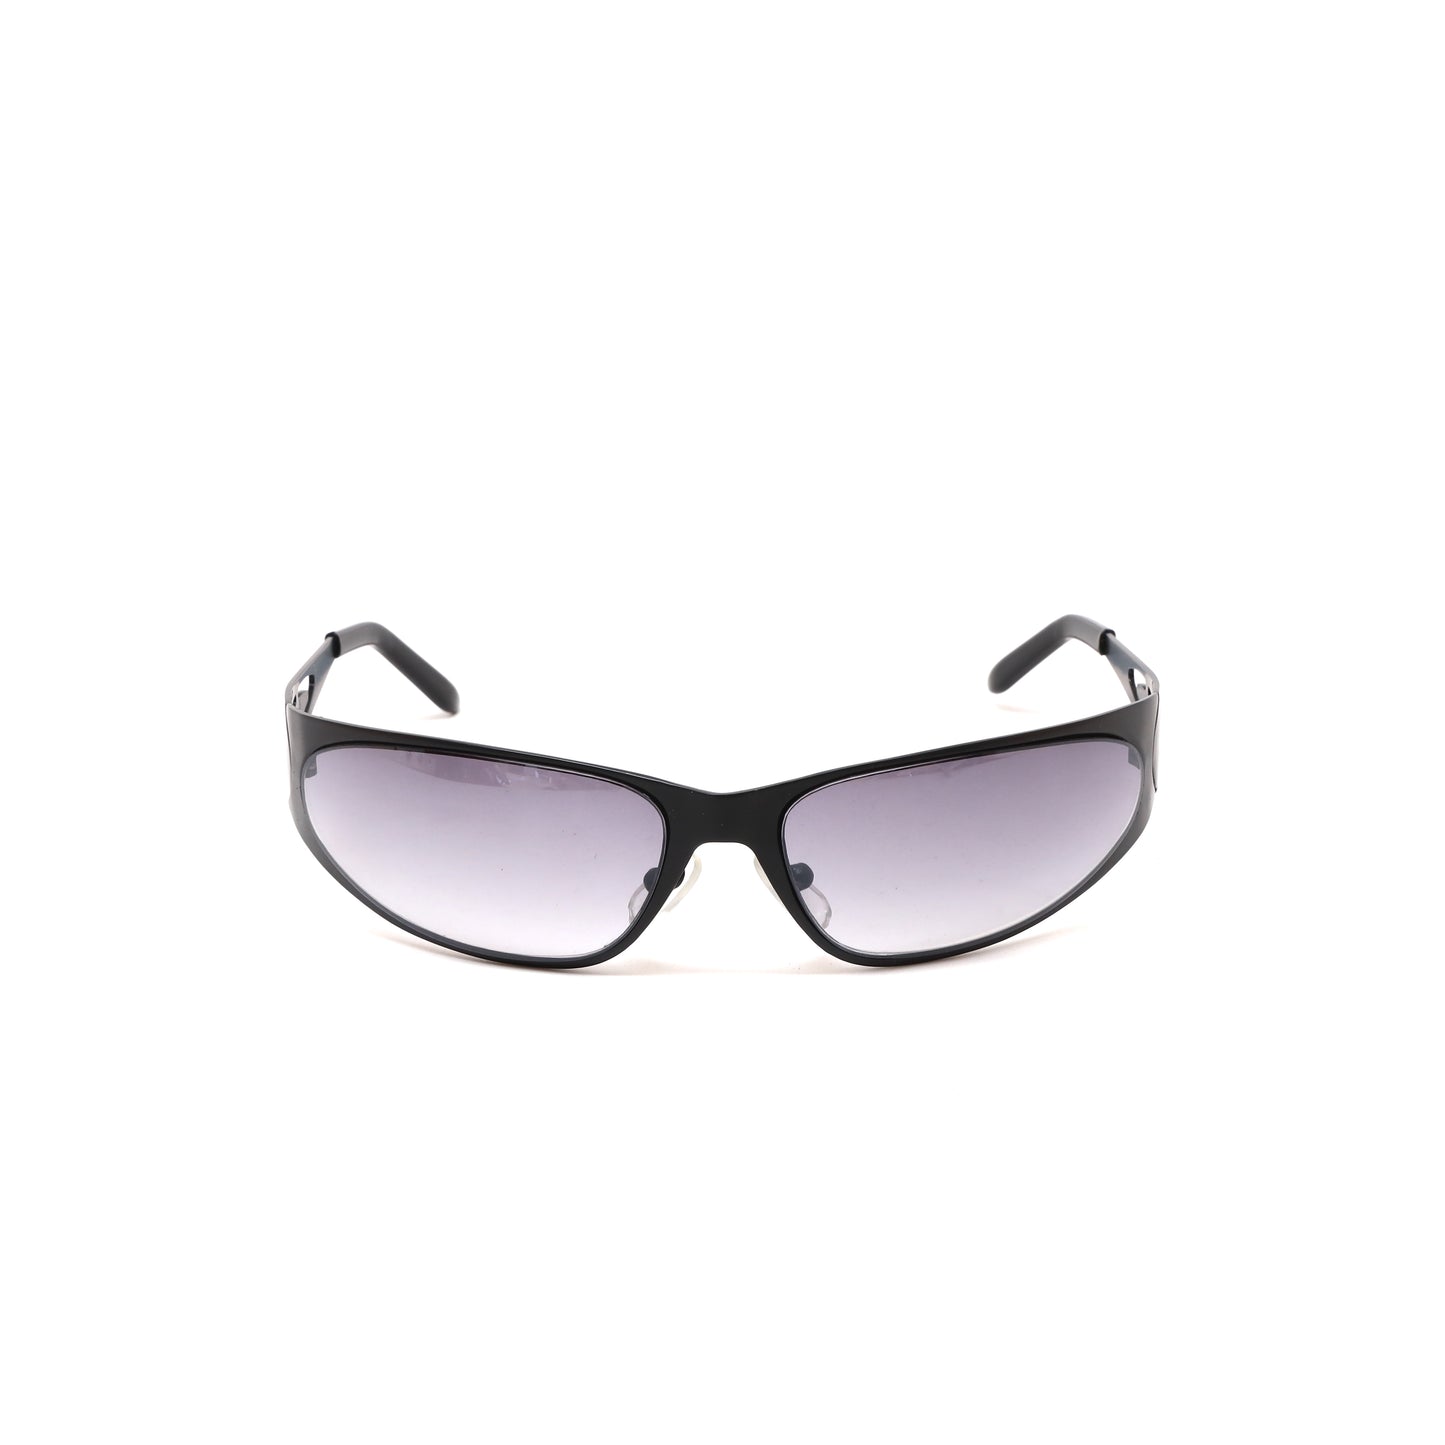 X-Static 2000 Wraparound Style Sunglasses - Black